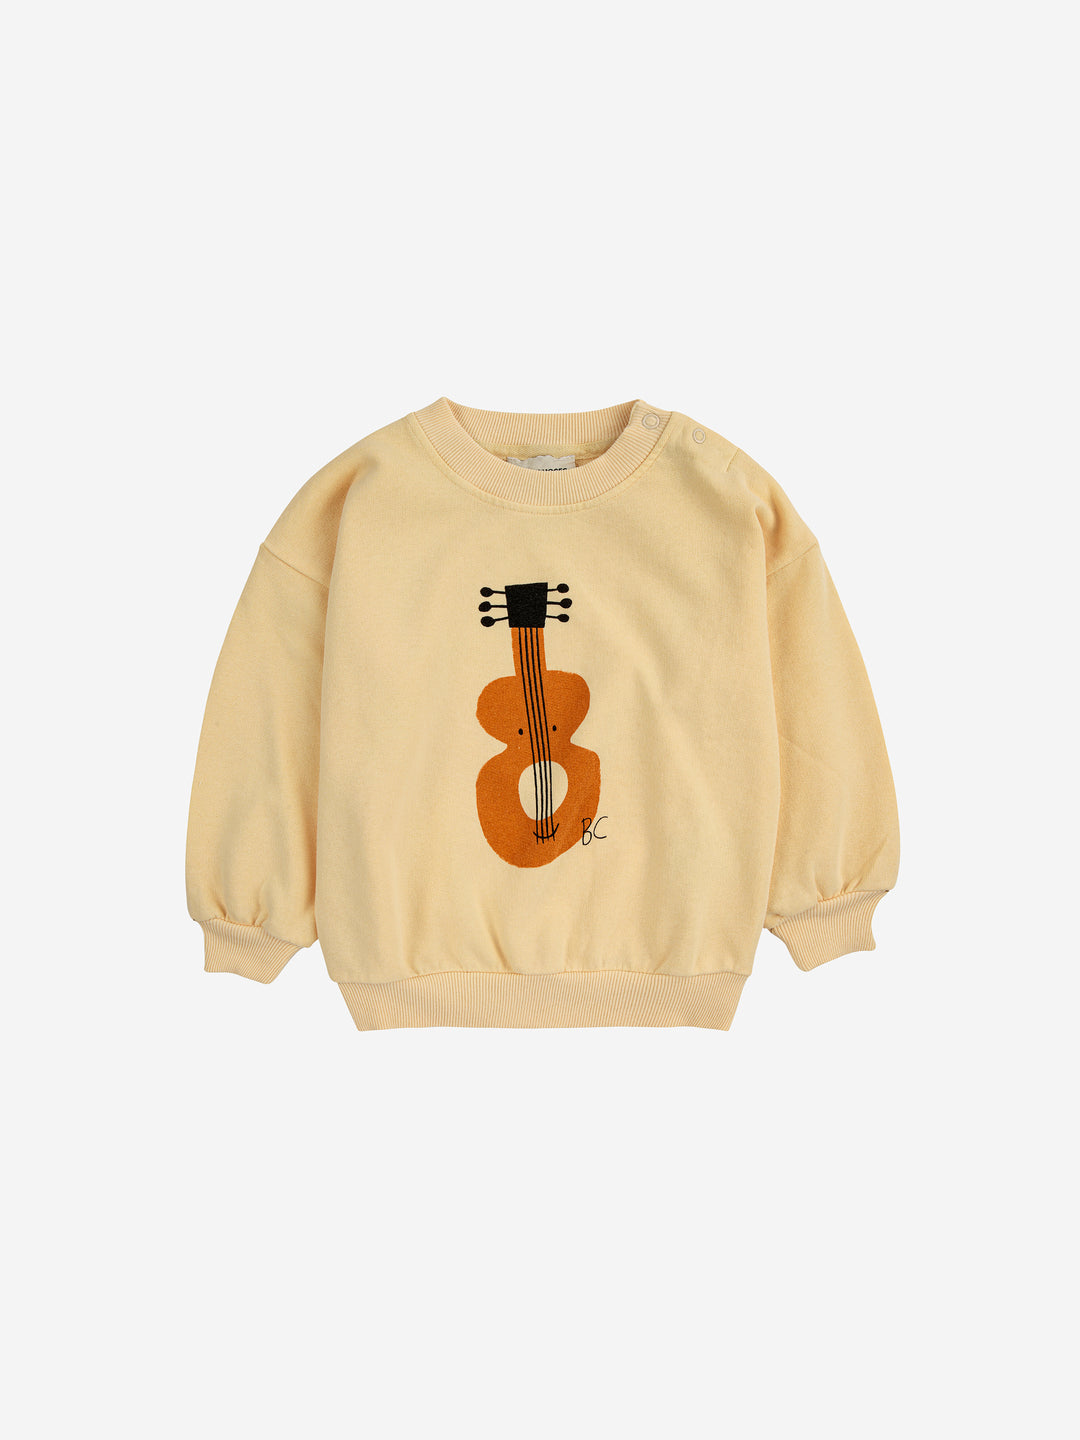 Baby Acoustic Guitar Sweatshirt by Bobo Choses